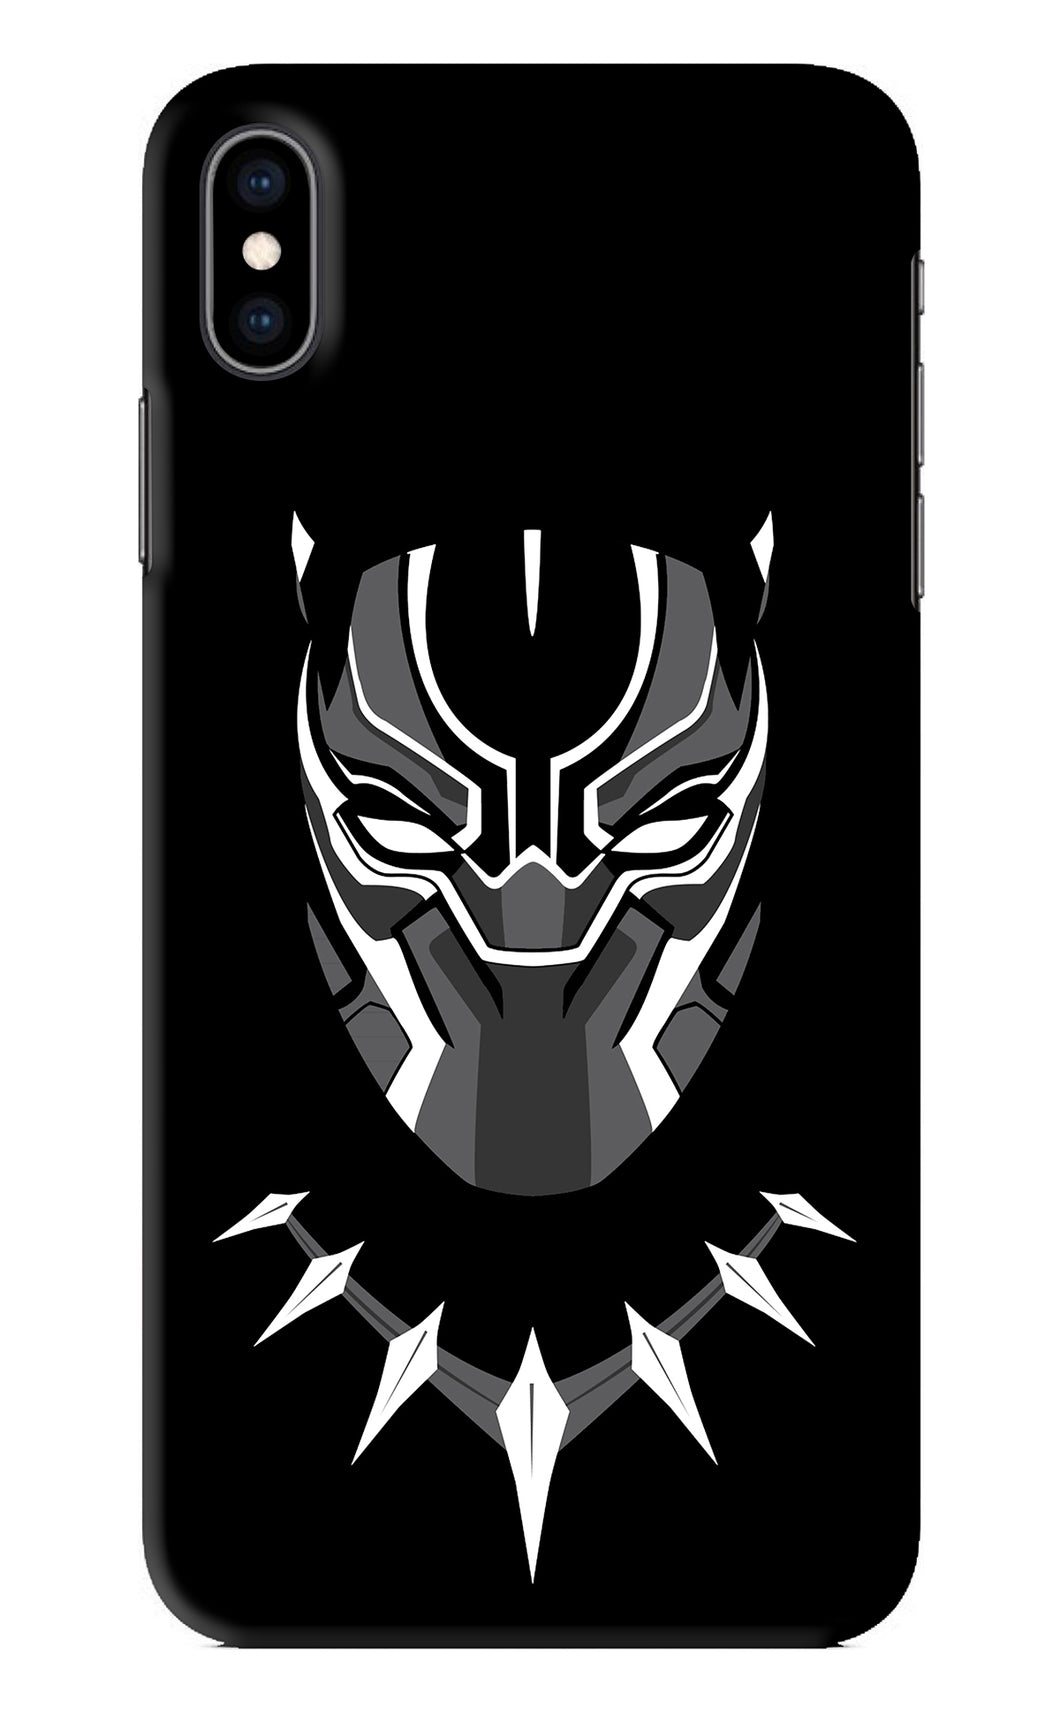 Black Panther iPhone XS Max Back Skin Wrap